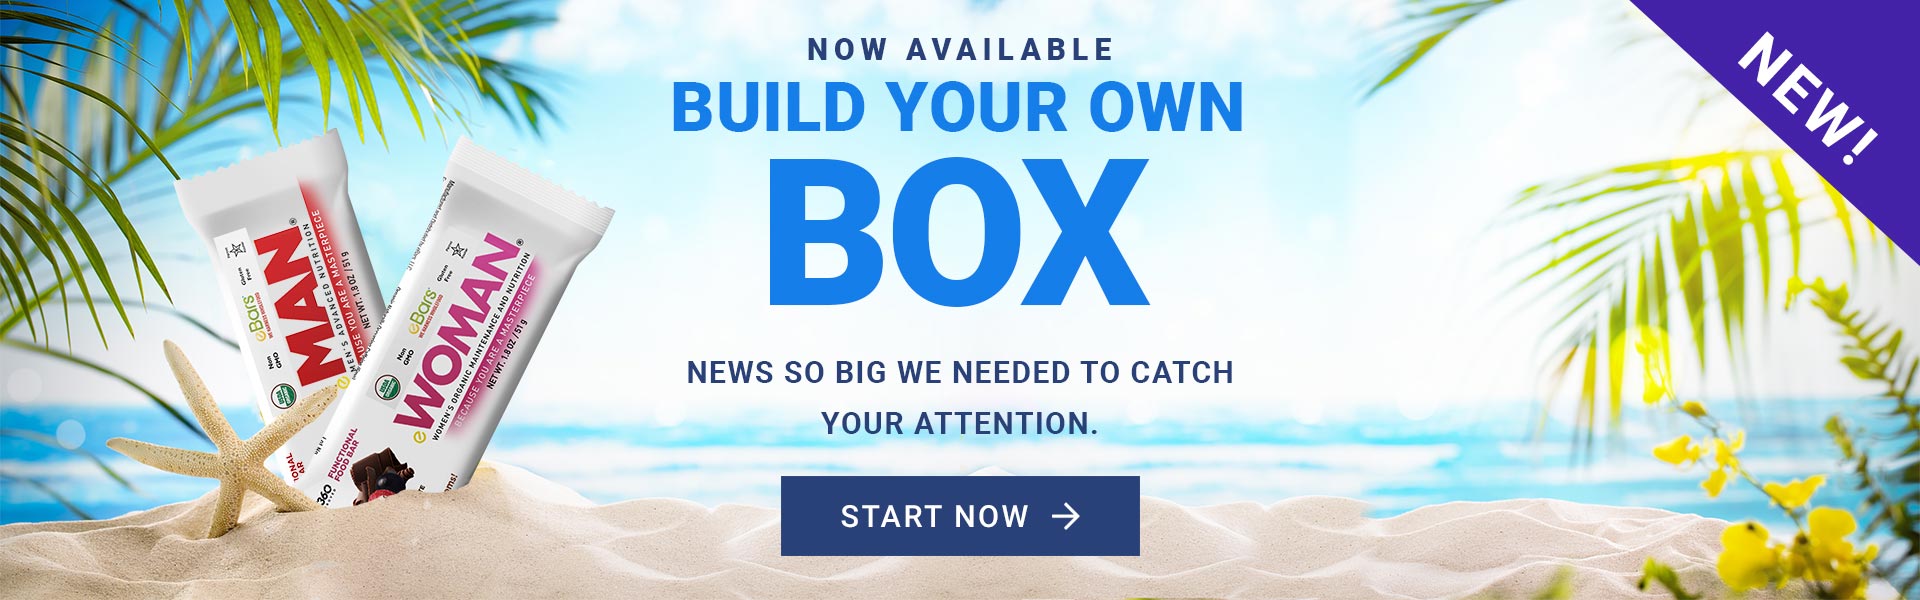 Build A Box